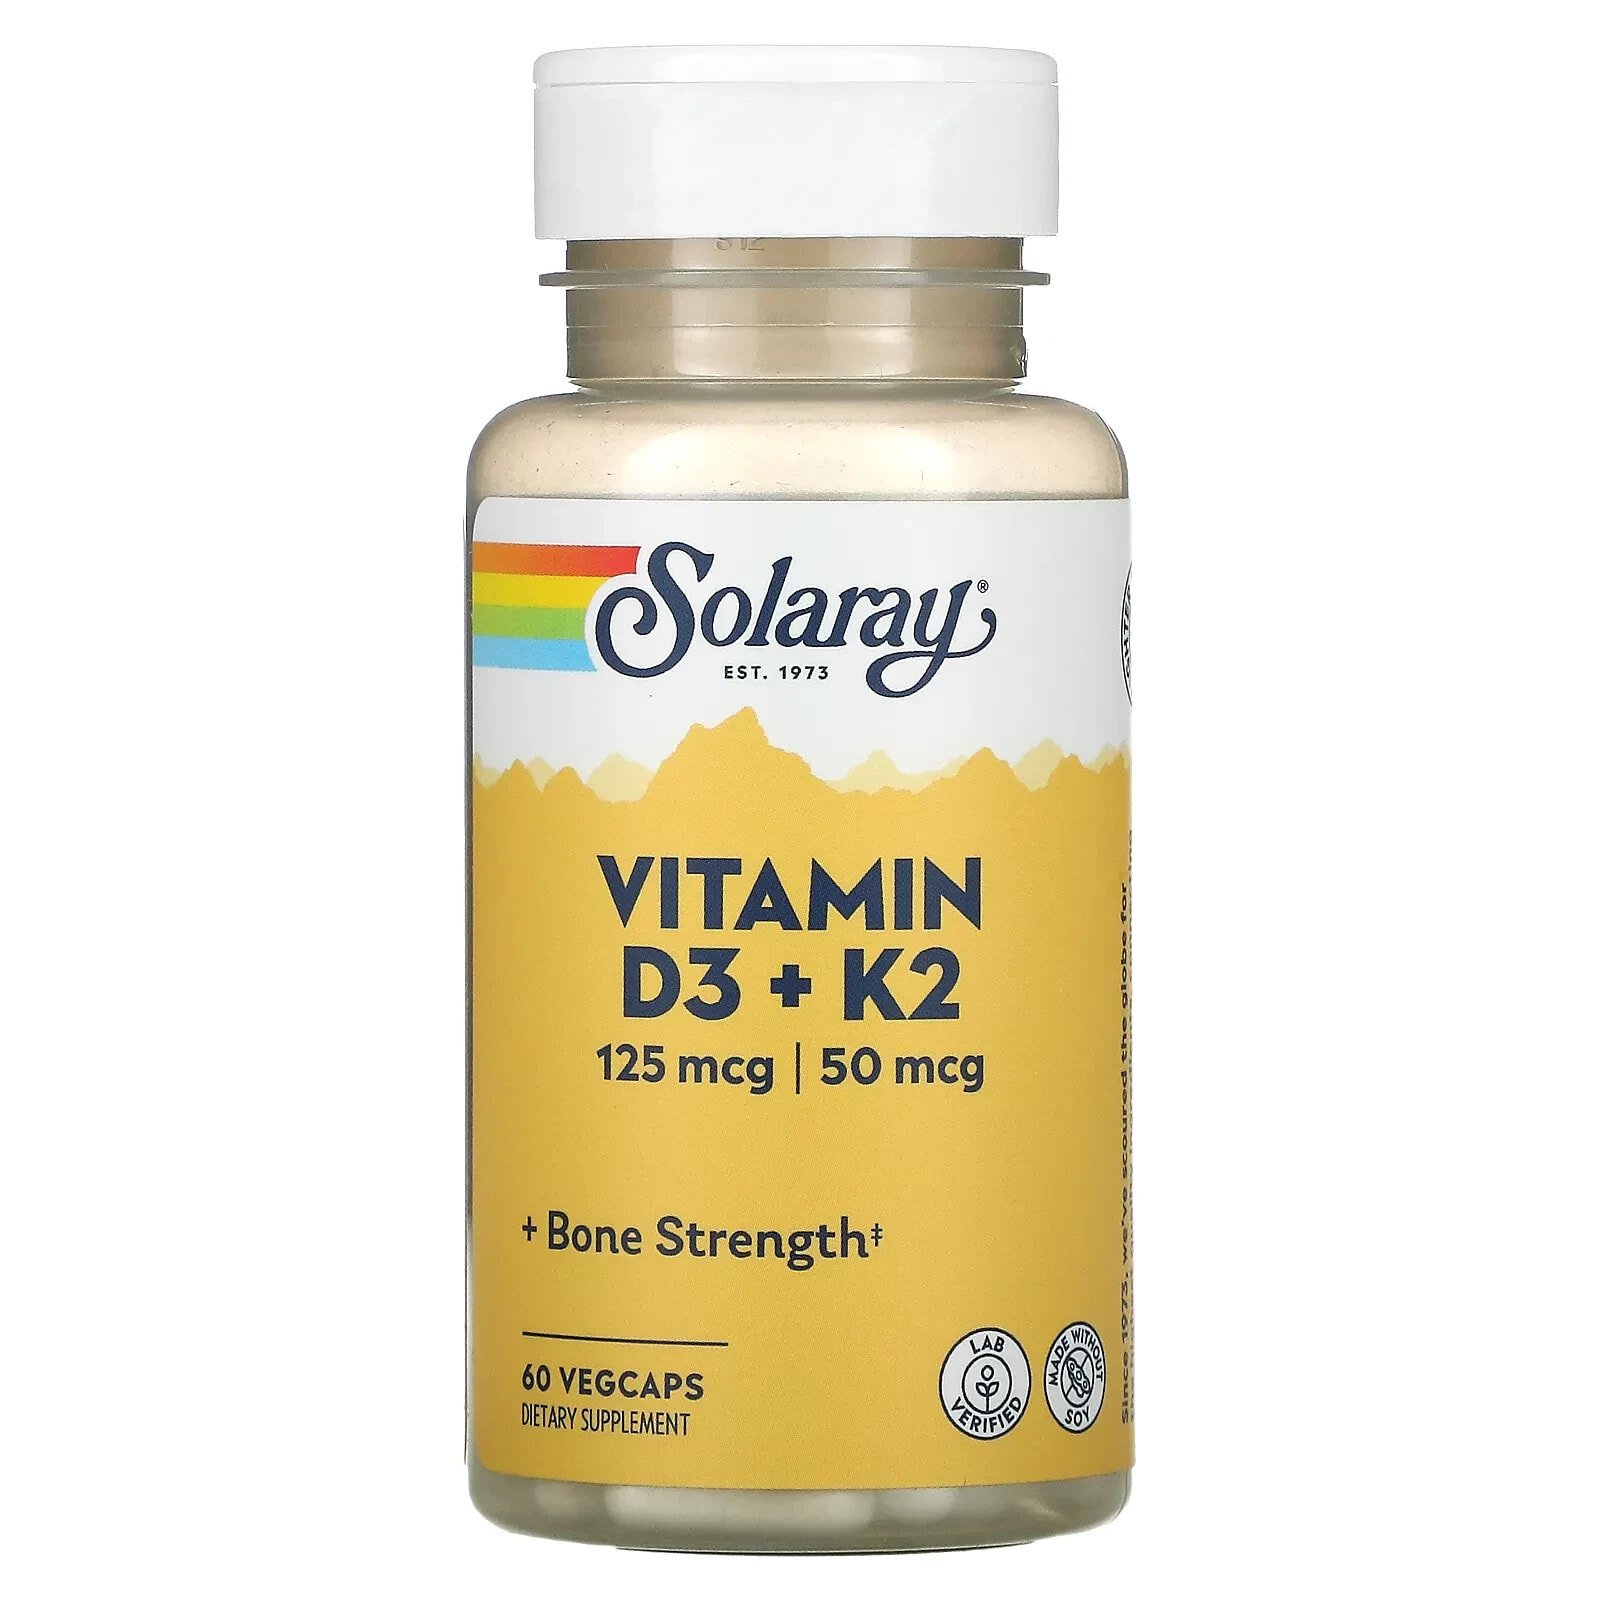 Solaray, Vitamin D3 + K2, 120 VegCaps